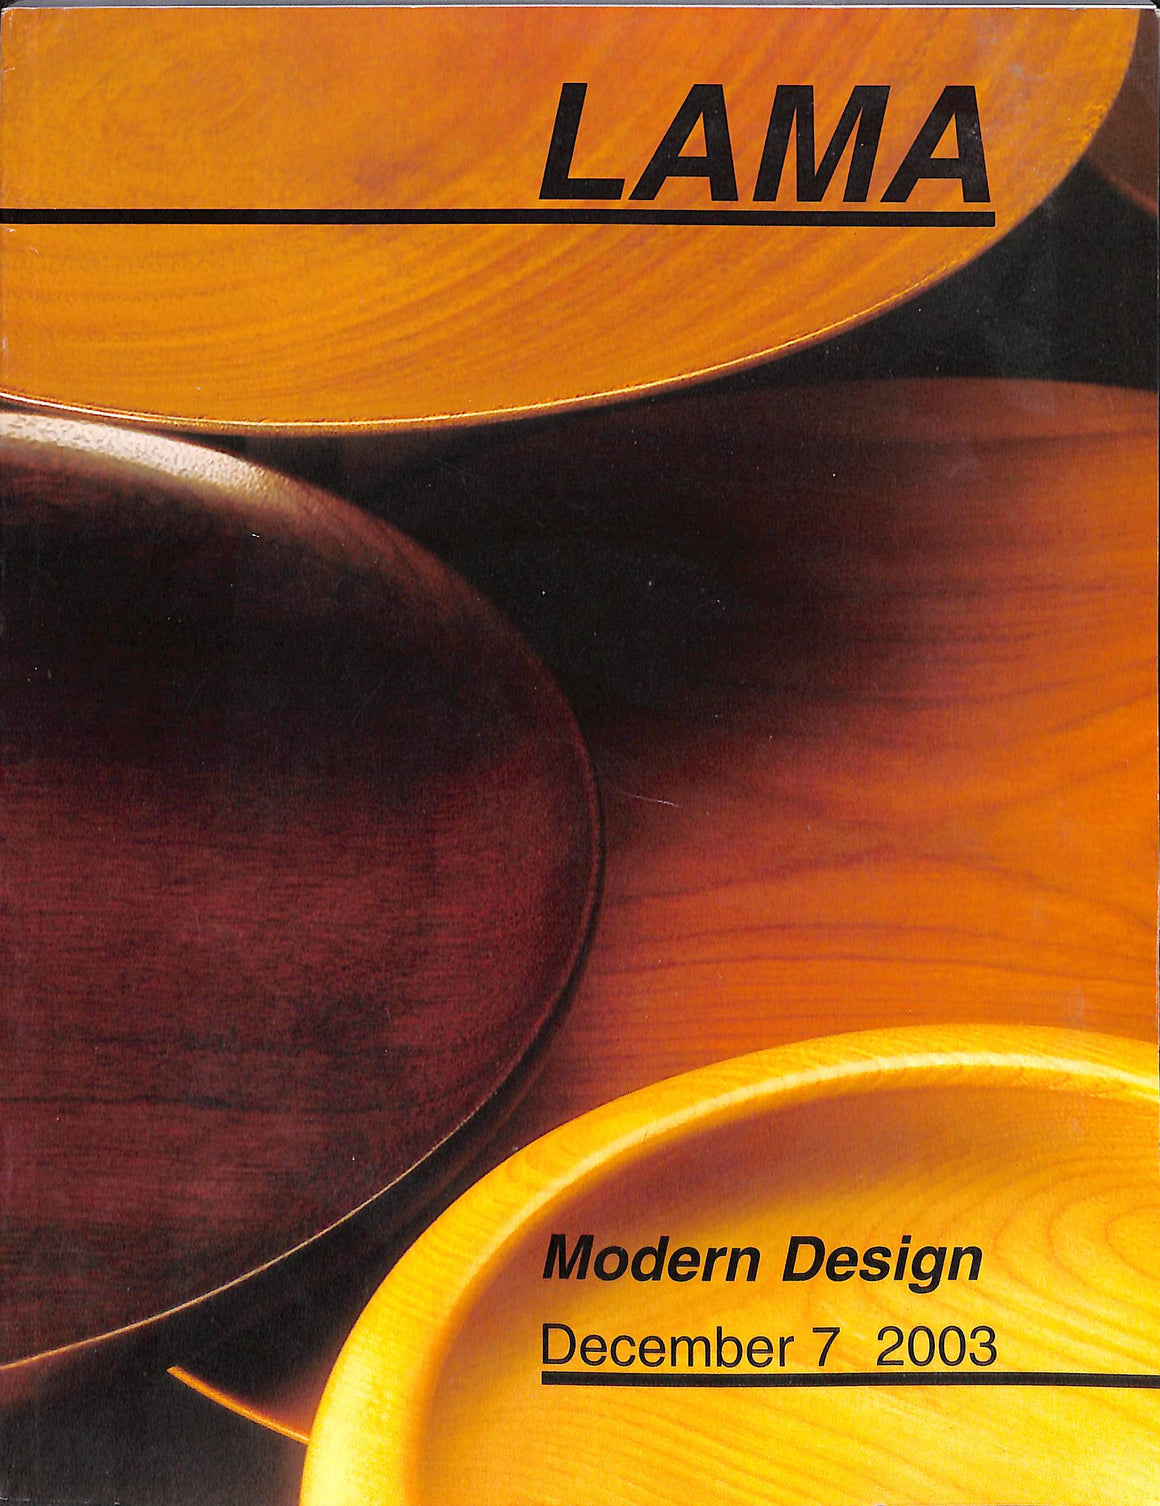 "LAMA: Modern Design" December 7 2003